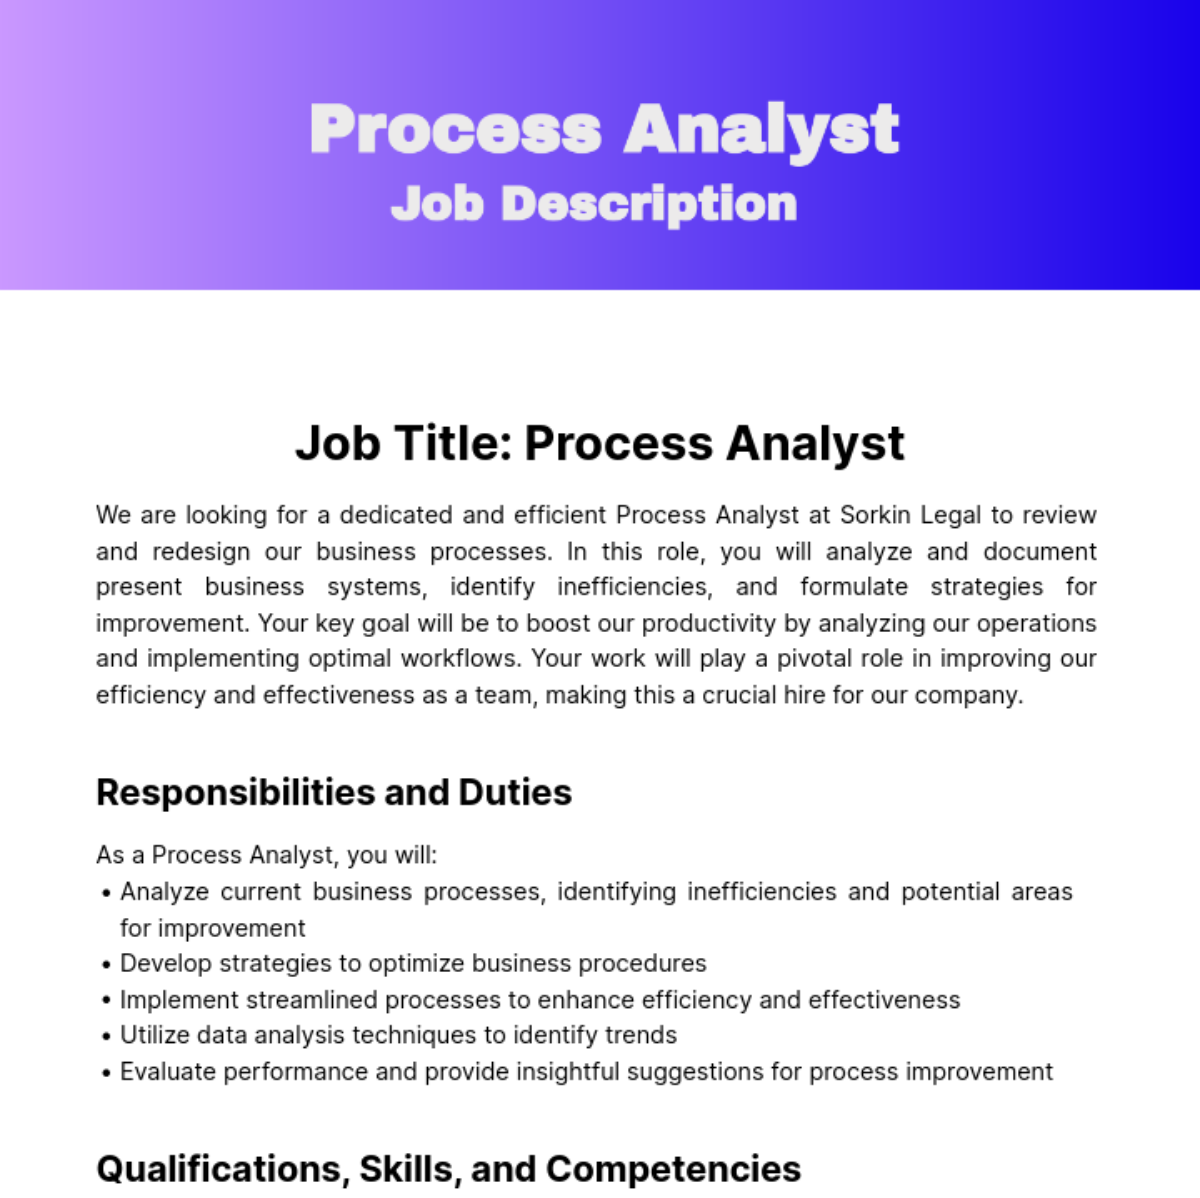 Process Analyst Job Description Template